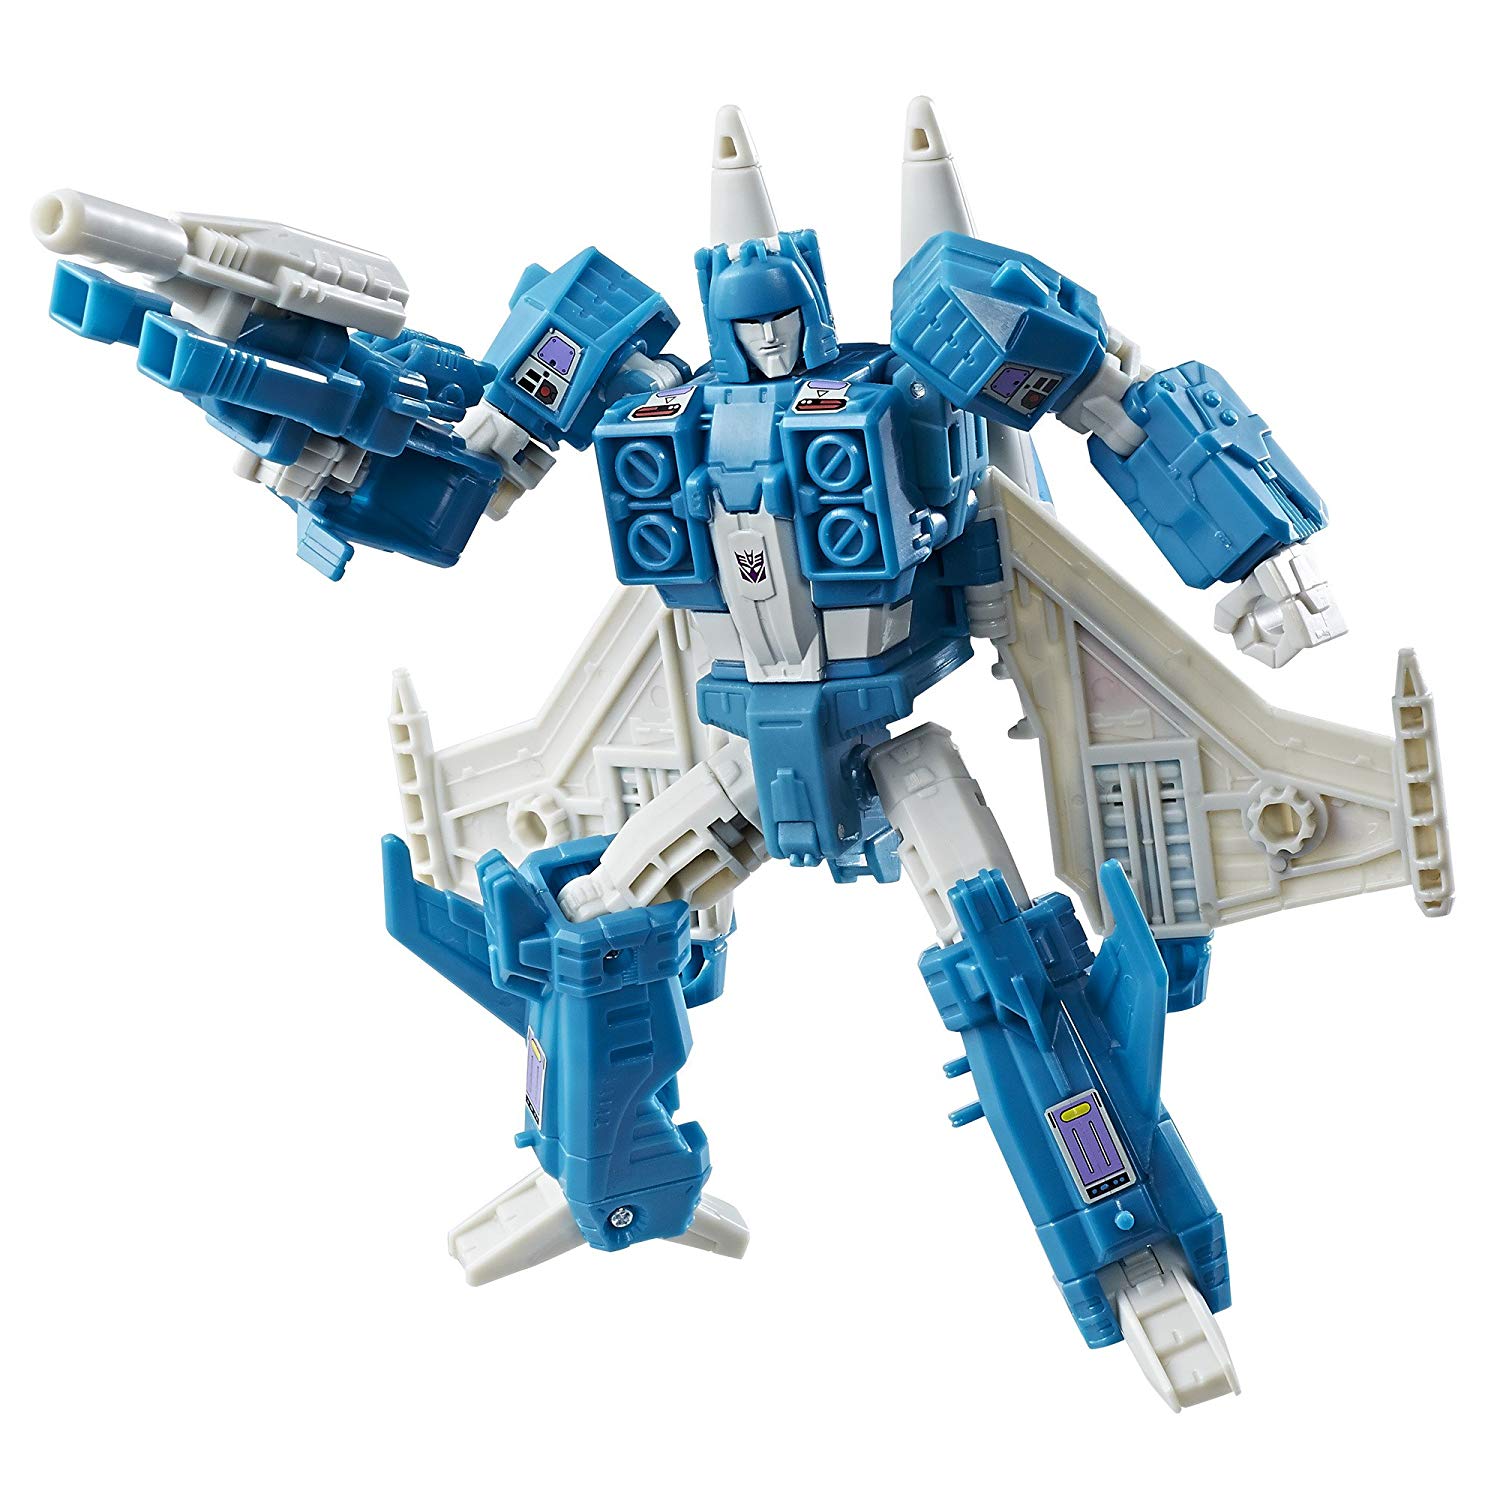 Transformers Generations Titans Return Deluxe Class Slugslinger and Caliburst Figure